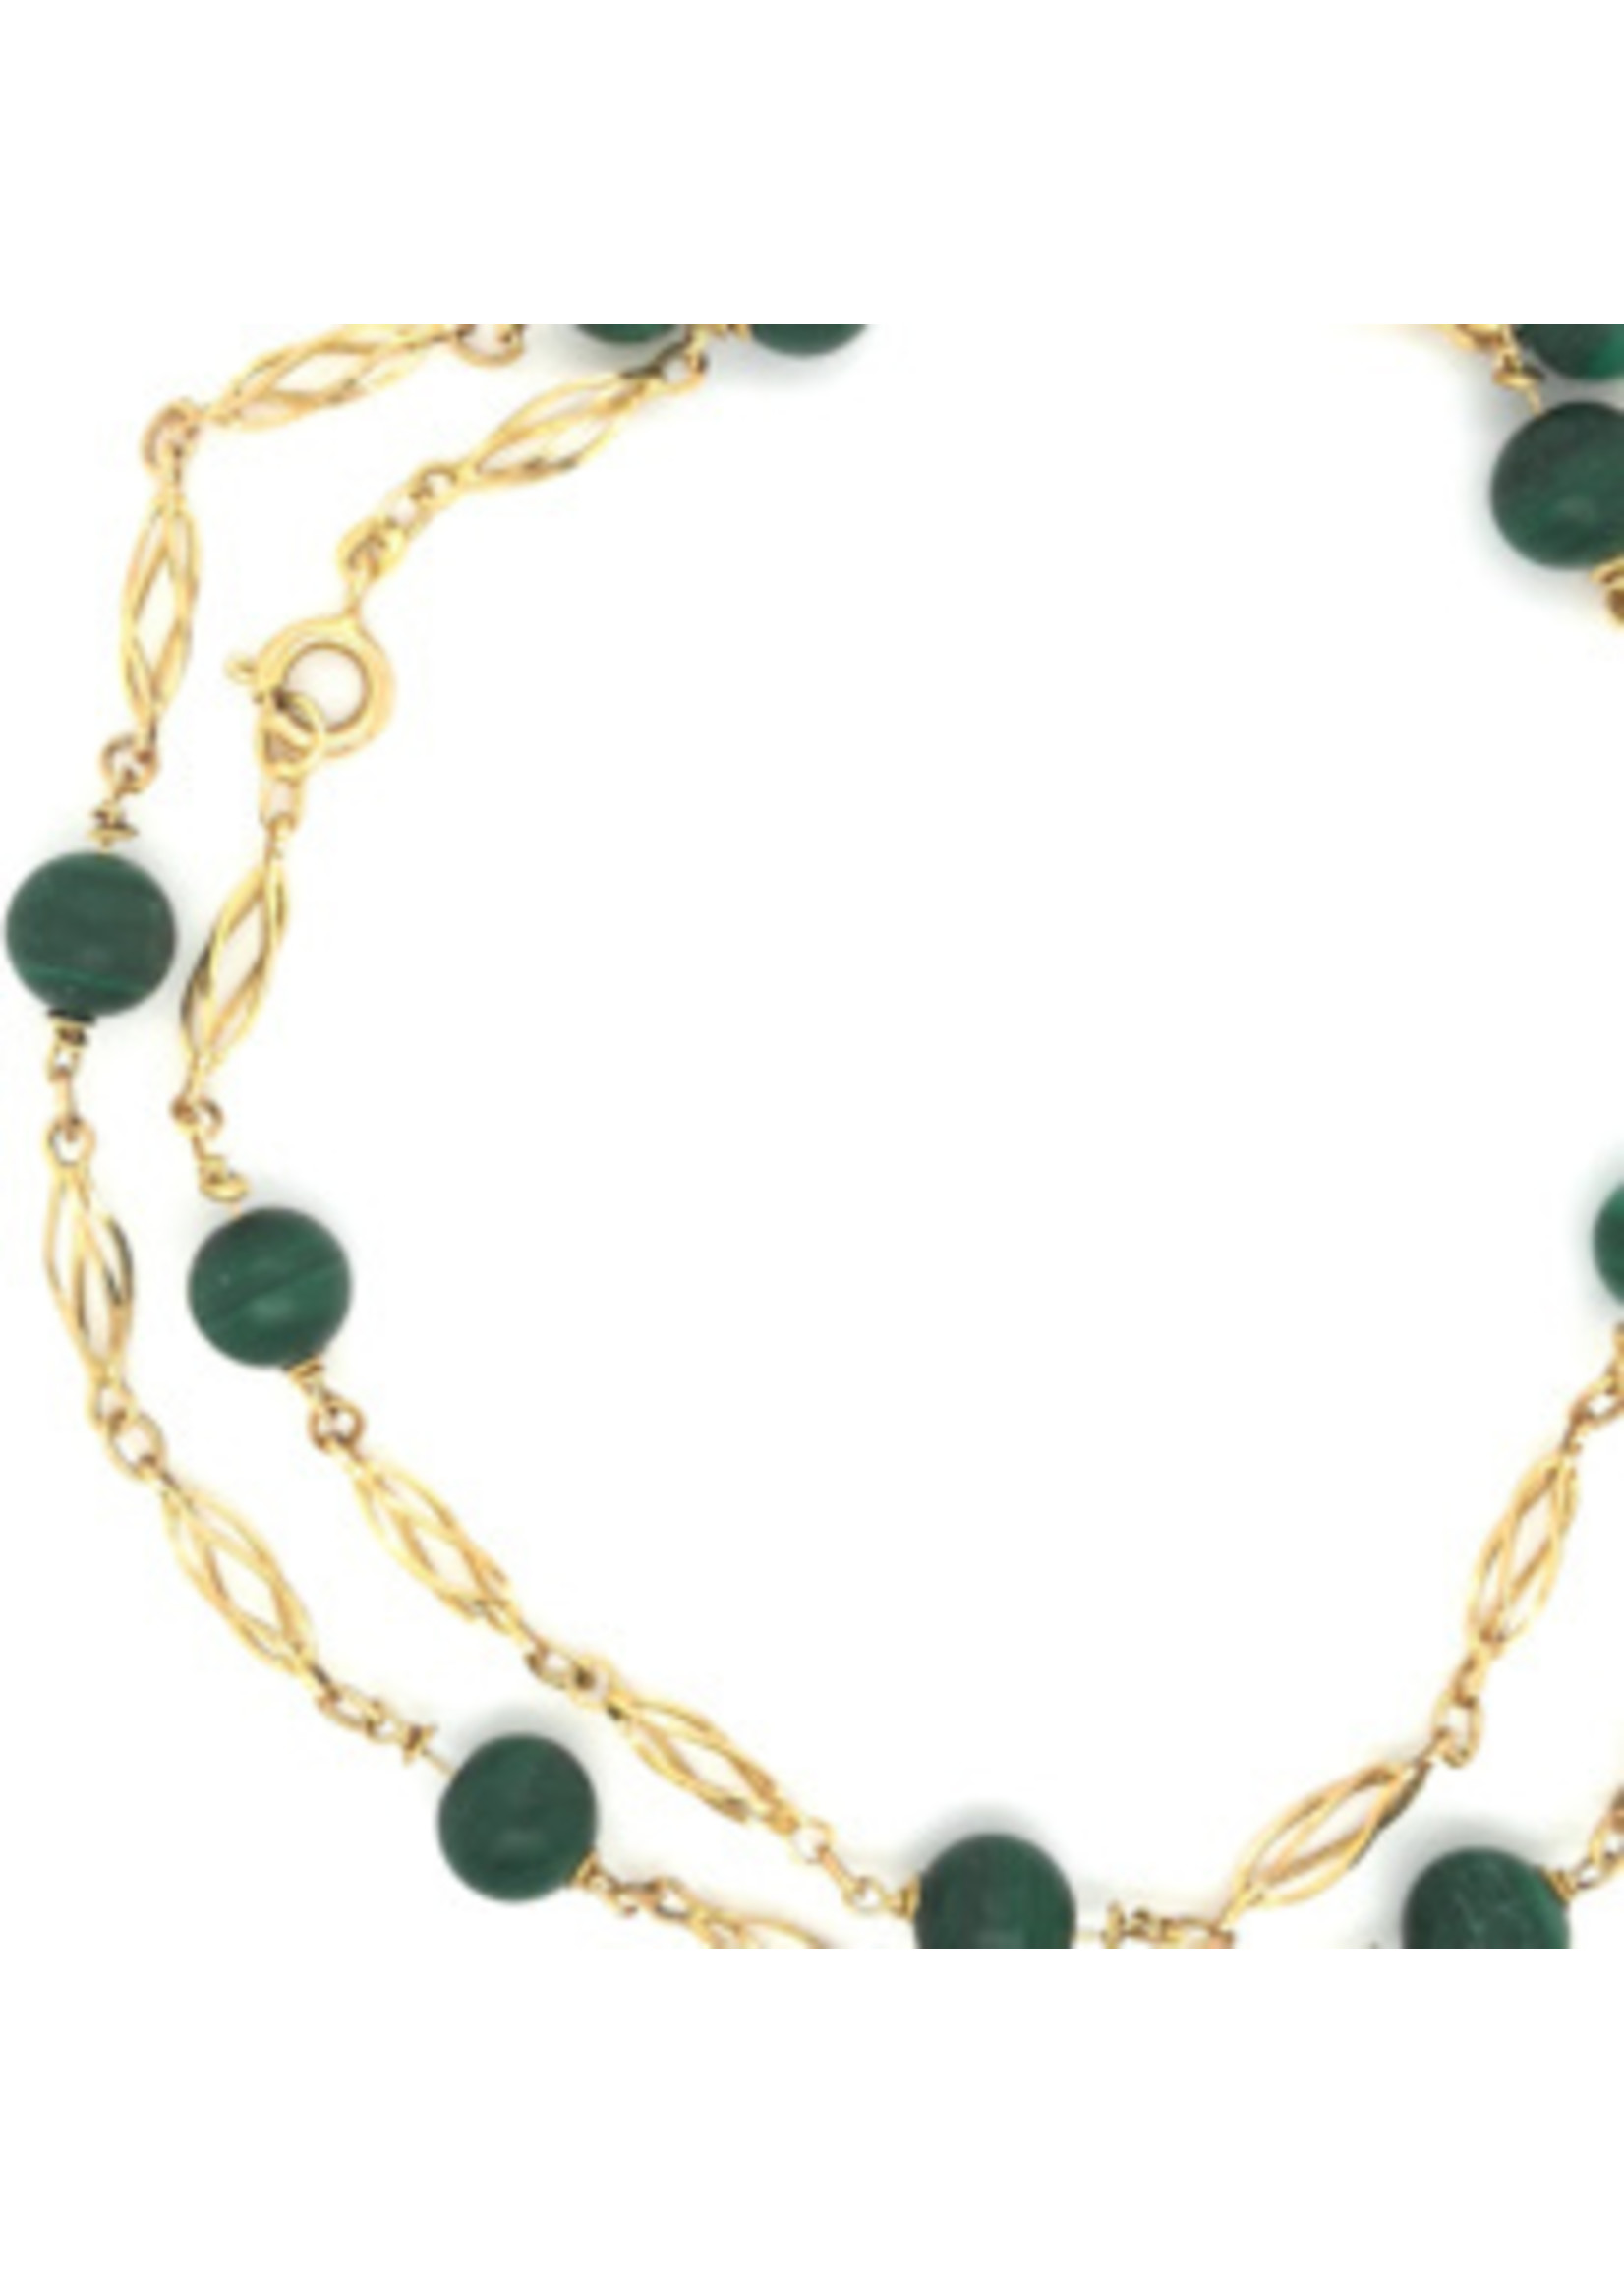 Vintage & Occasion Occasion gouden collier met groene malachiet edelstenen